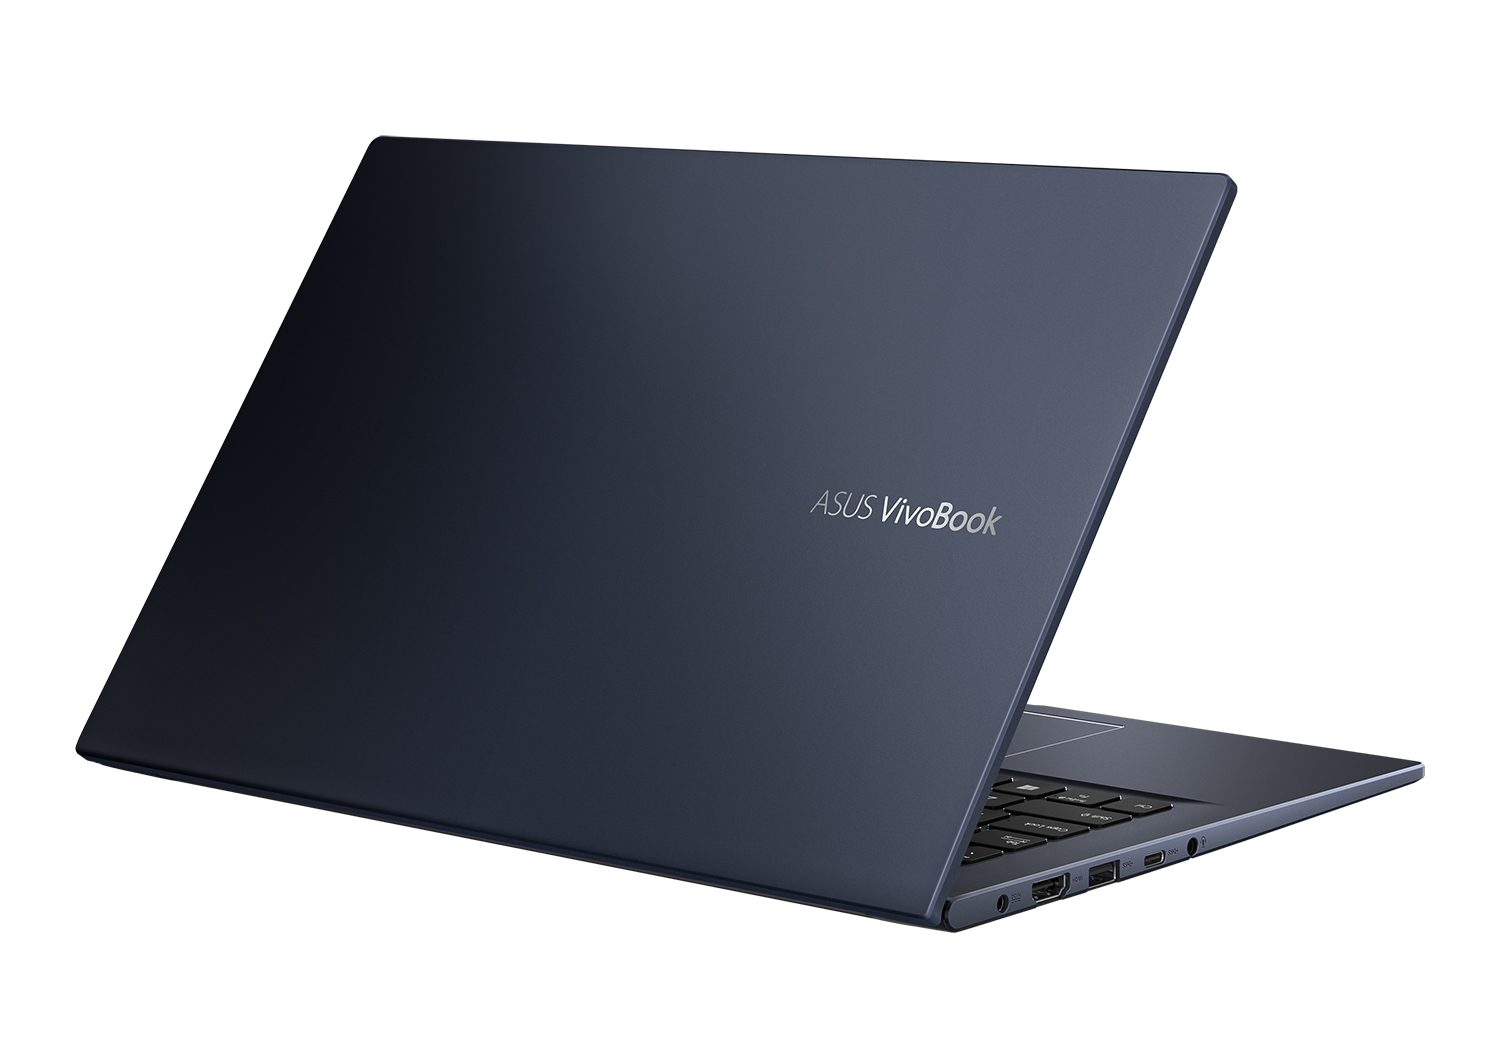 ASUS VivoBook 14 M413 Everyday Value Laptop (AMD Ryzen 5 3500U 4-Core, 8GB RAM, 1TB PCIe SSD, 14.0" Full HD (1920x1080), AMD Vega 8, Fingerprint, Wifi, Bluetooth, Win 10 Pro) (Used) - image 3 of 3